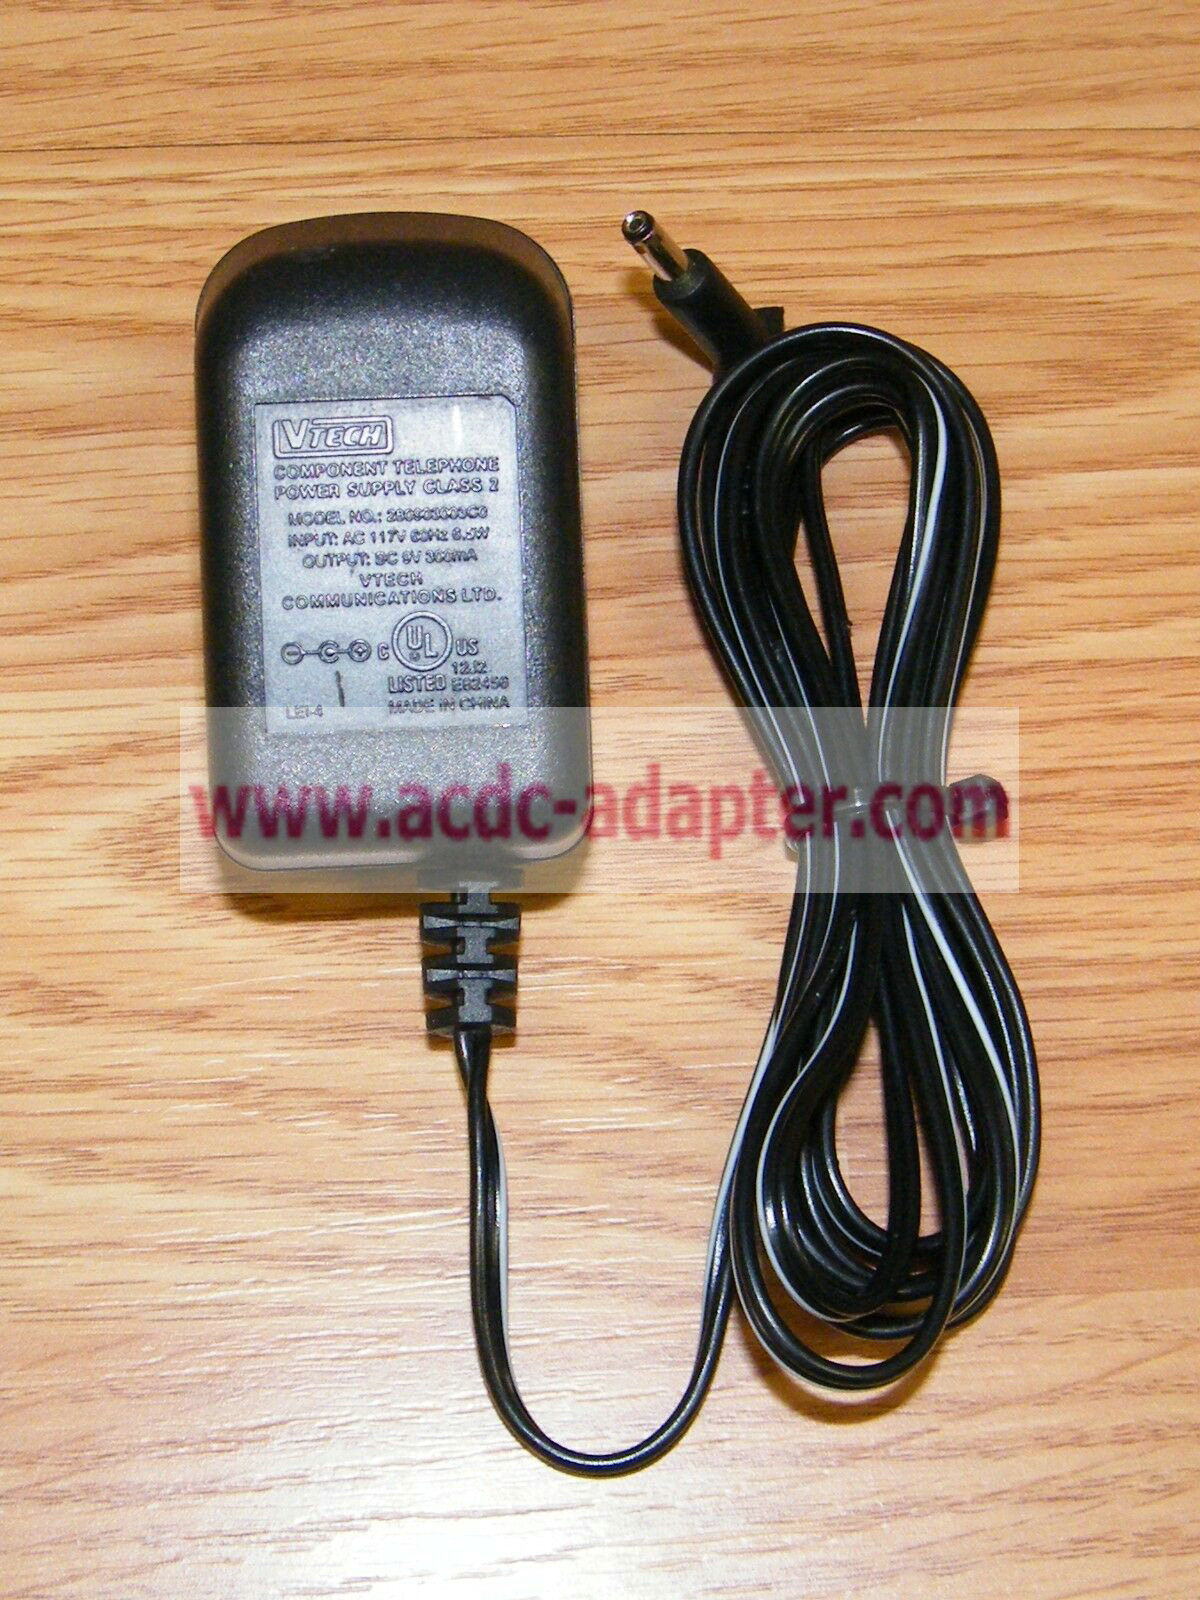 Genuine 9V 300mA ac adapter Vtech 280903003C0 Component Telephone Power Supply